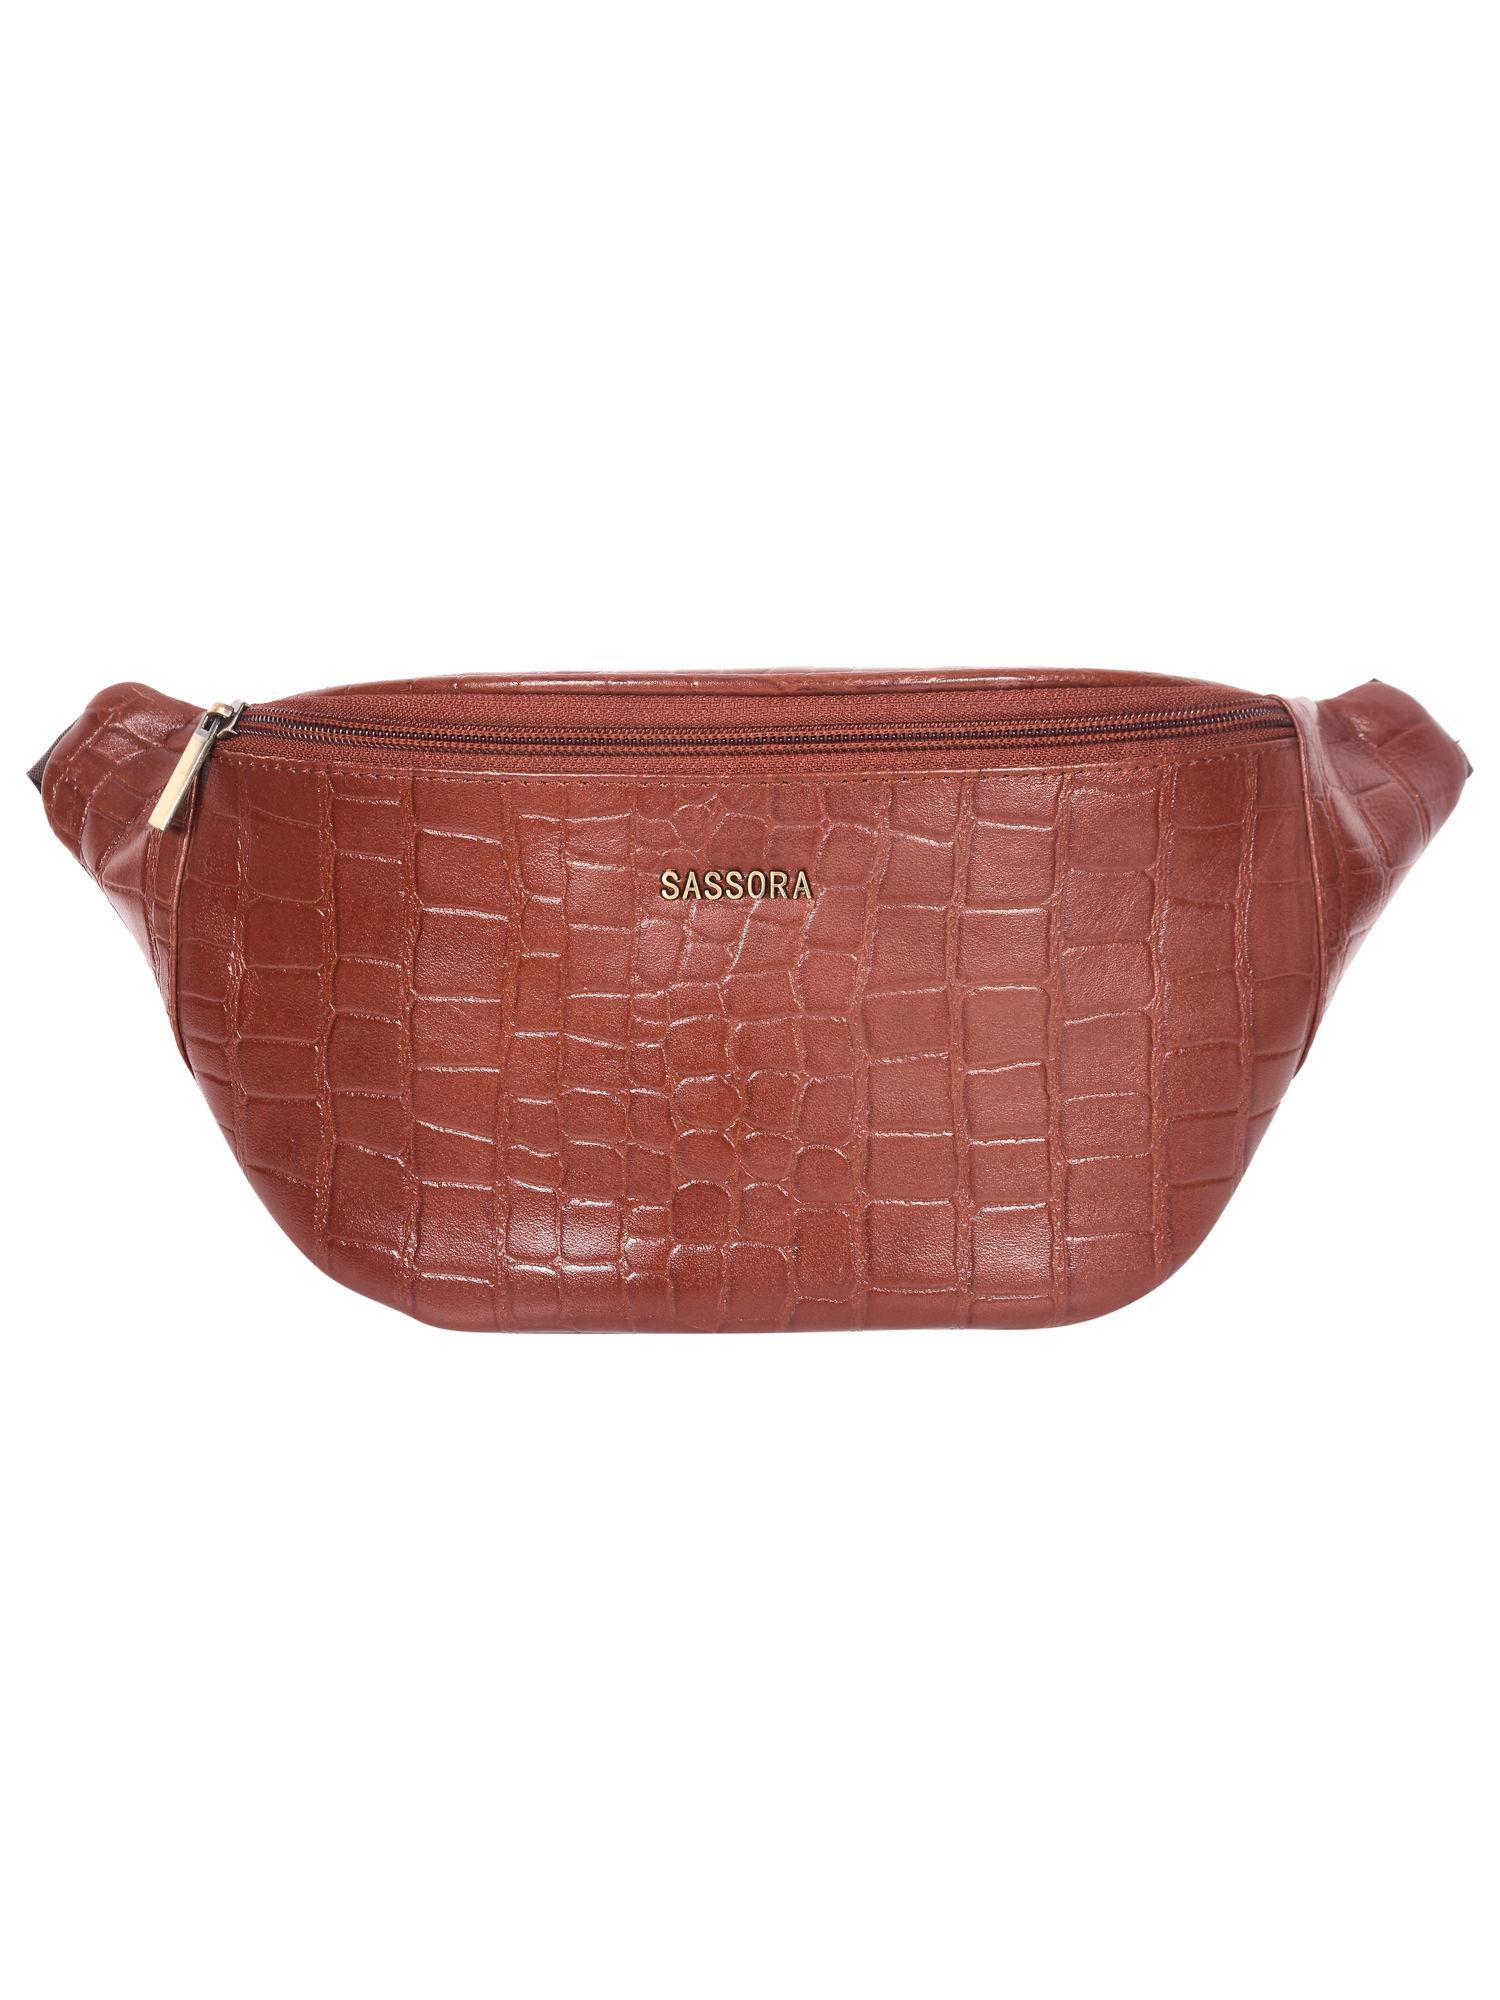 genuine premium leather brown belt bag waist bag (m)